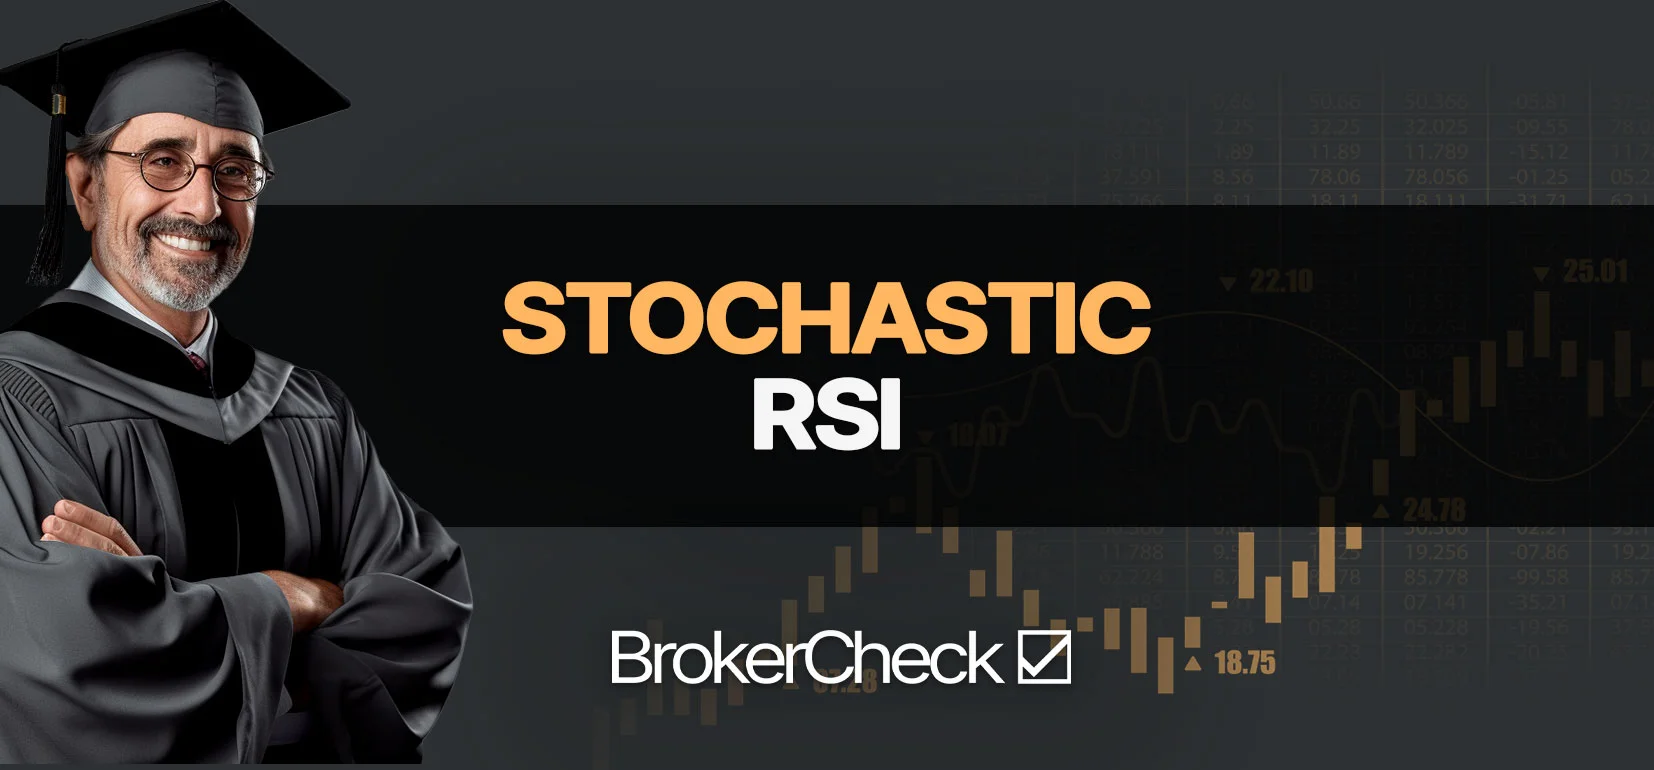 Stochastische RSI-indicator